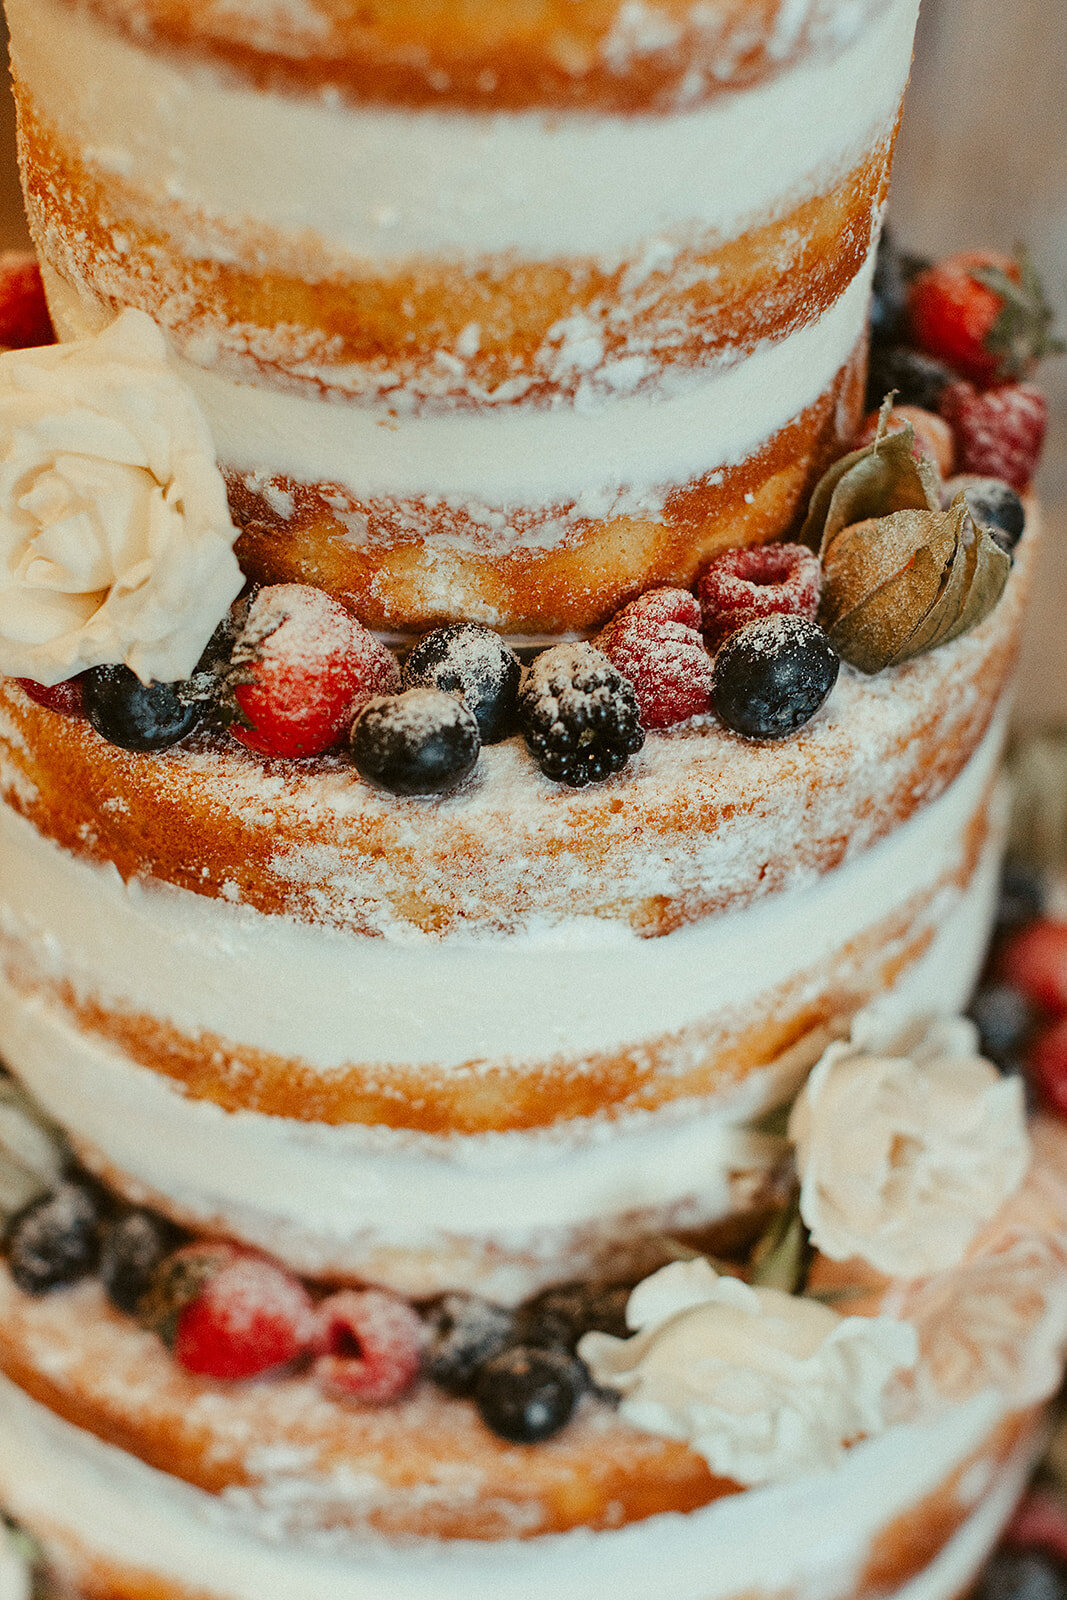 naked wedding cake with raspberries, blueberries and blackberries